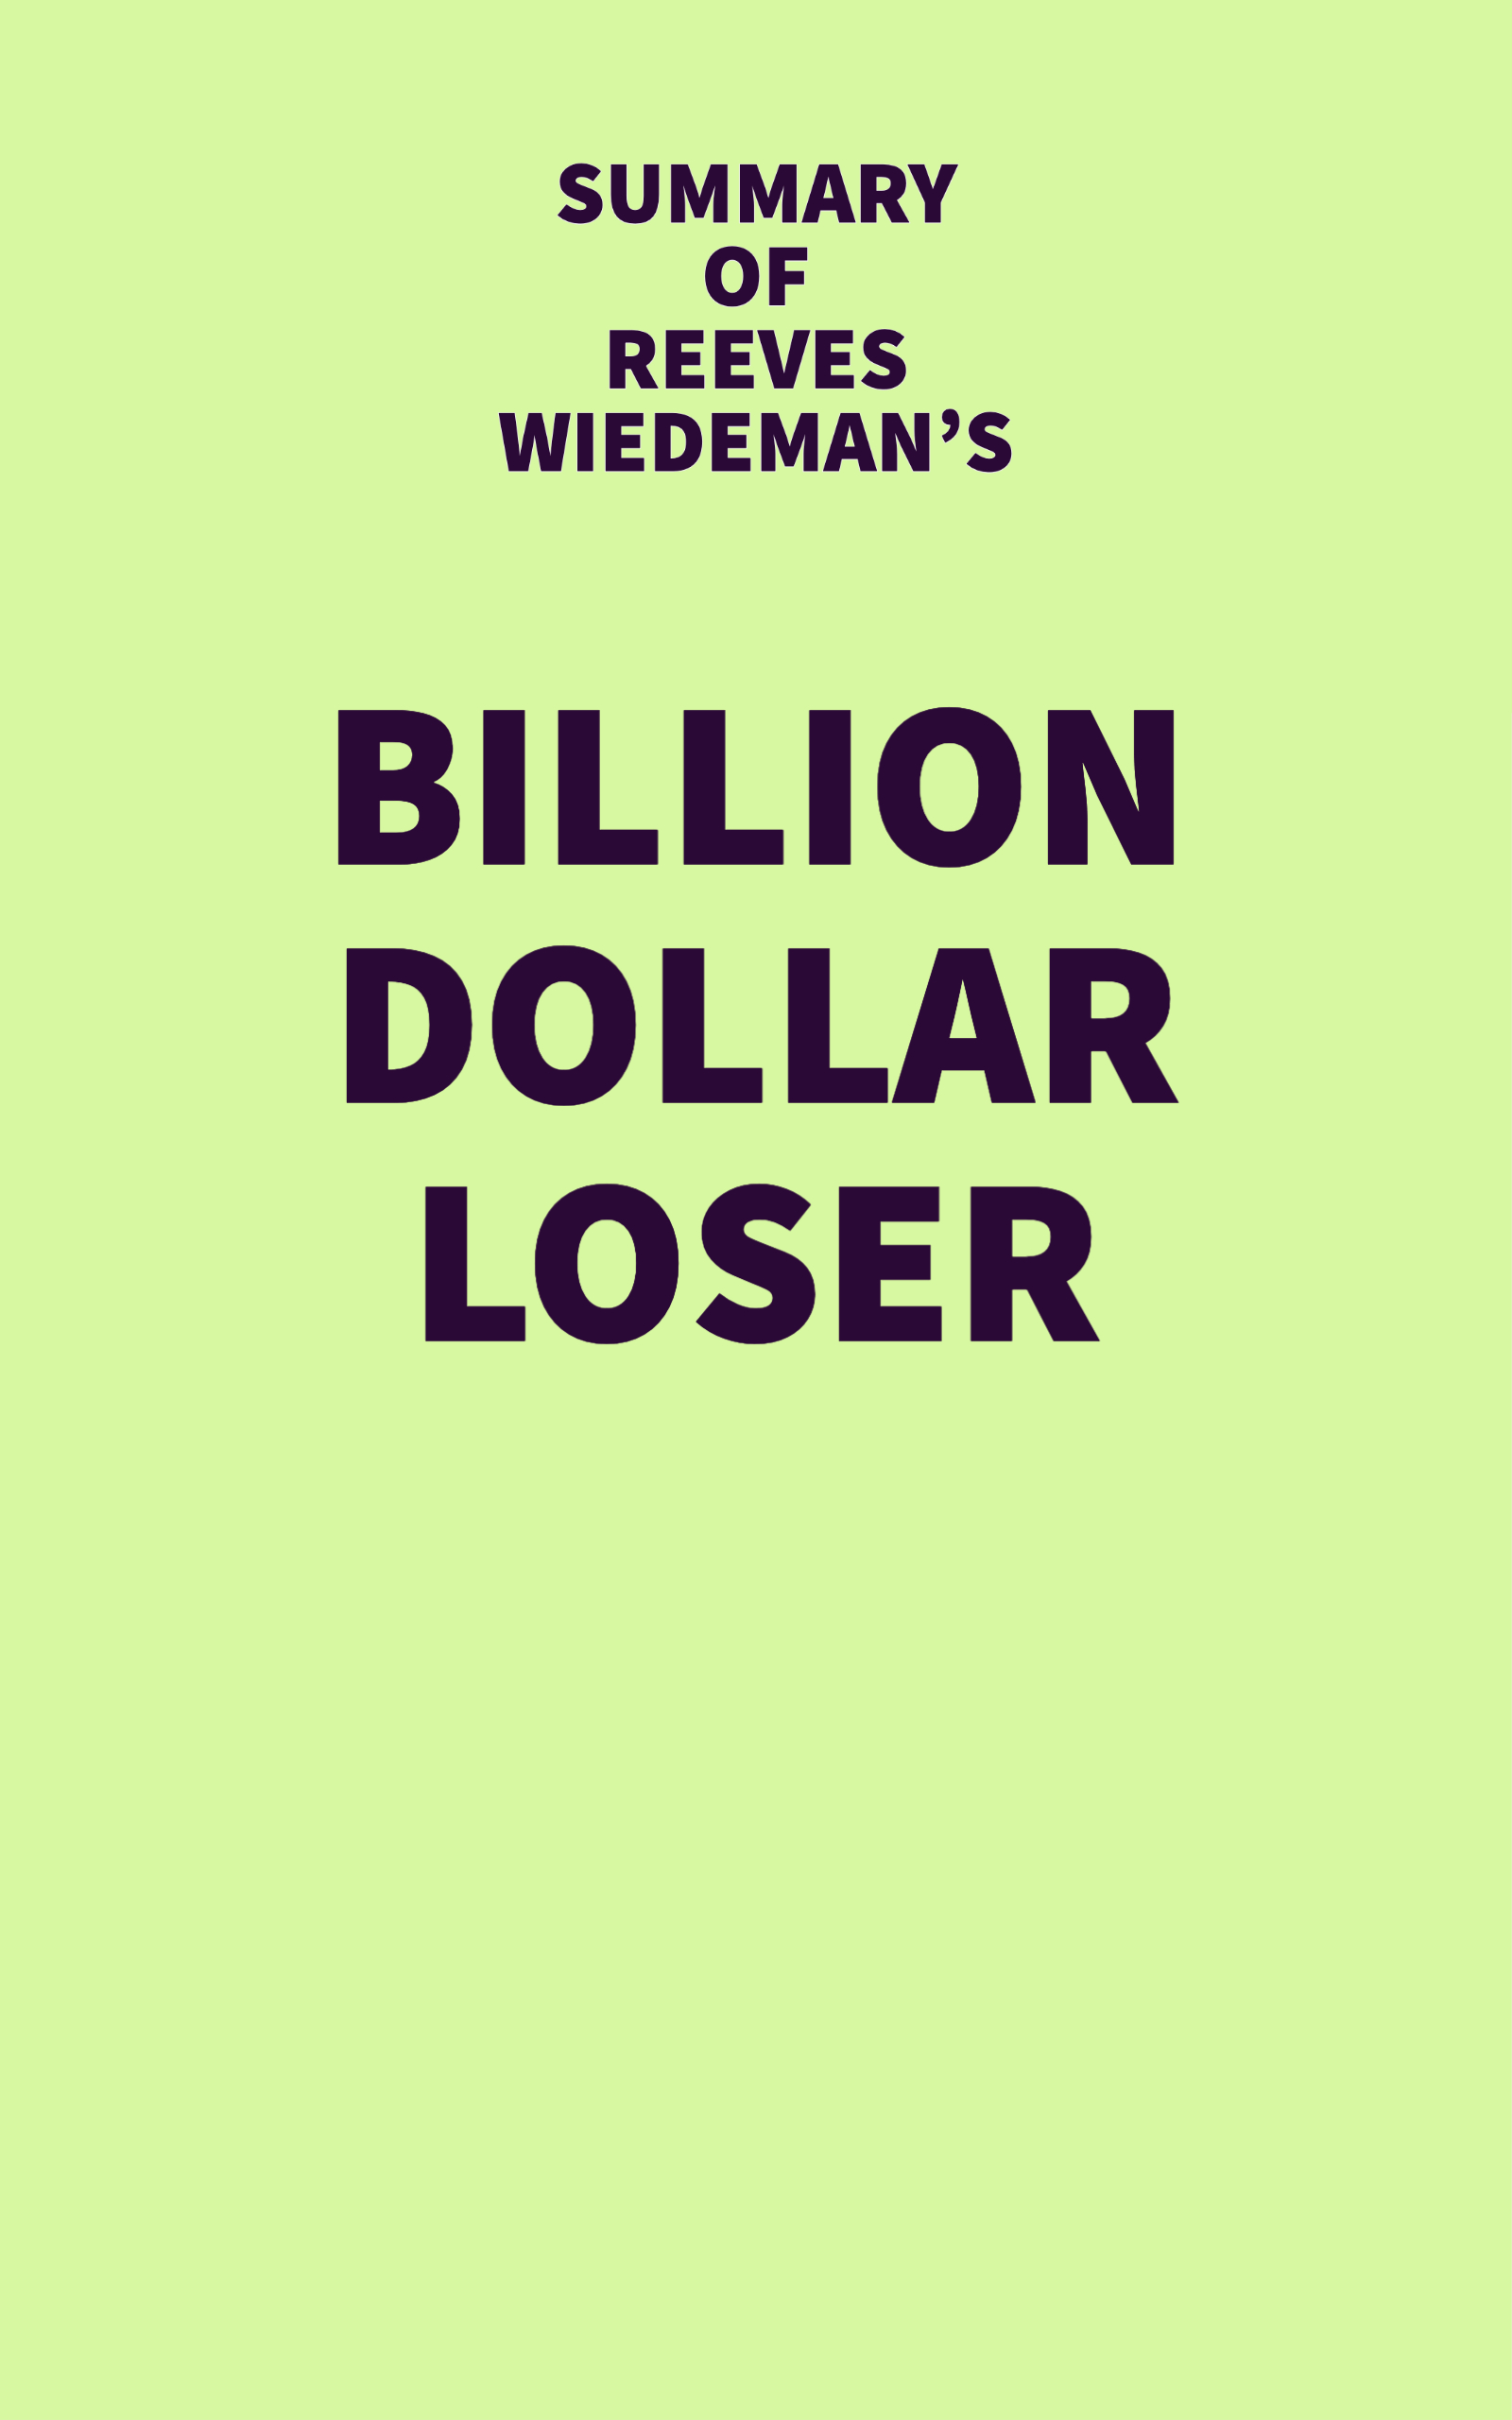 Summary of Reeves Wiedeman's Billion Dollar Loser